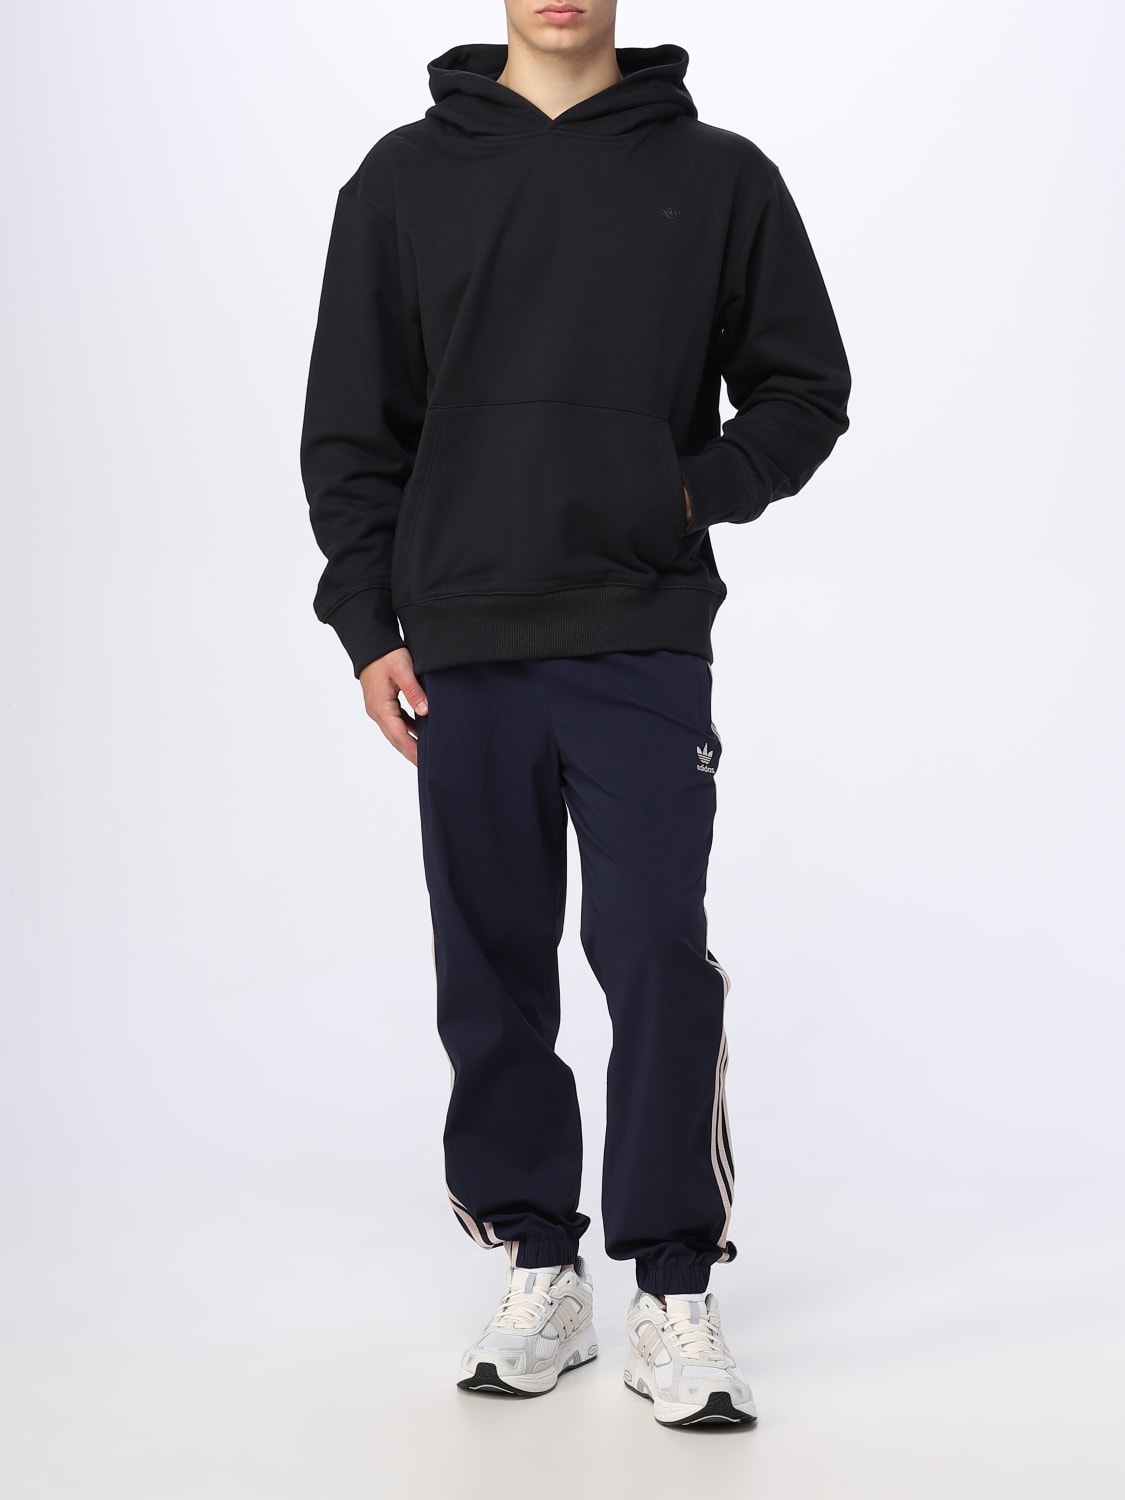 Black Adidas - HK2937 ORIGINALS: at sweatshirt online ADIDAS cotton sweatshirt Originals | in